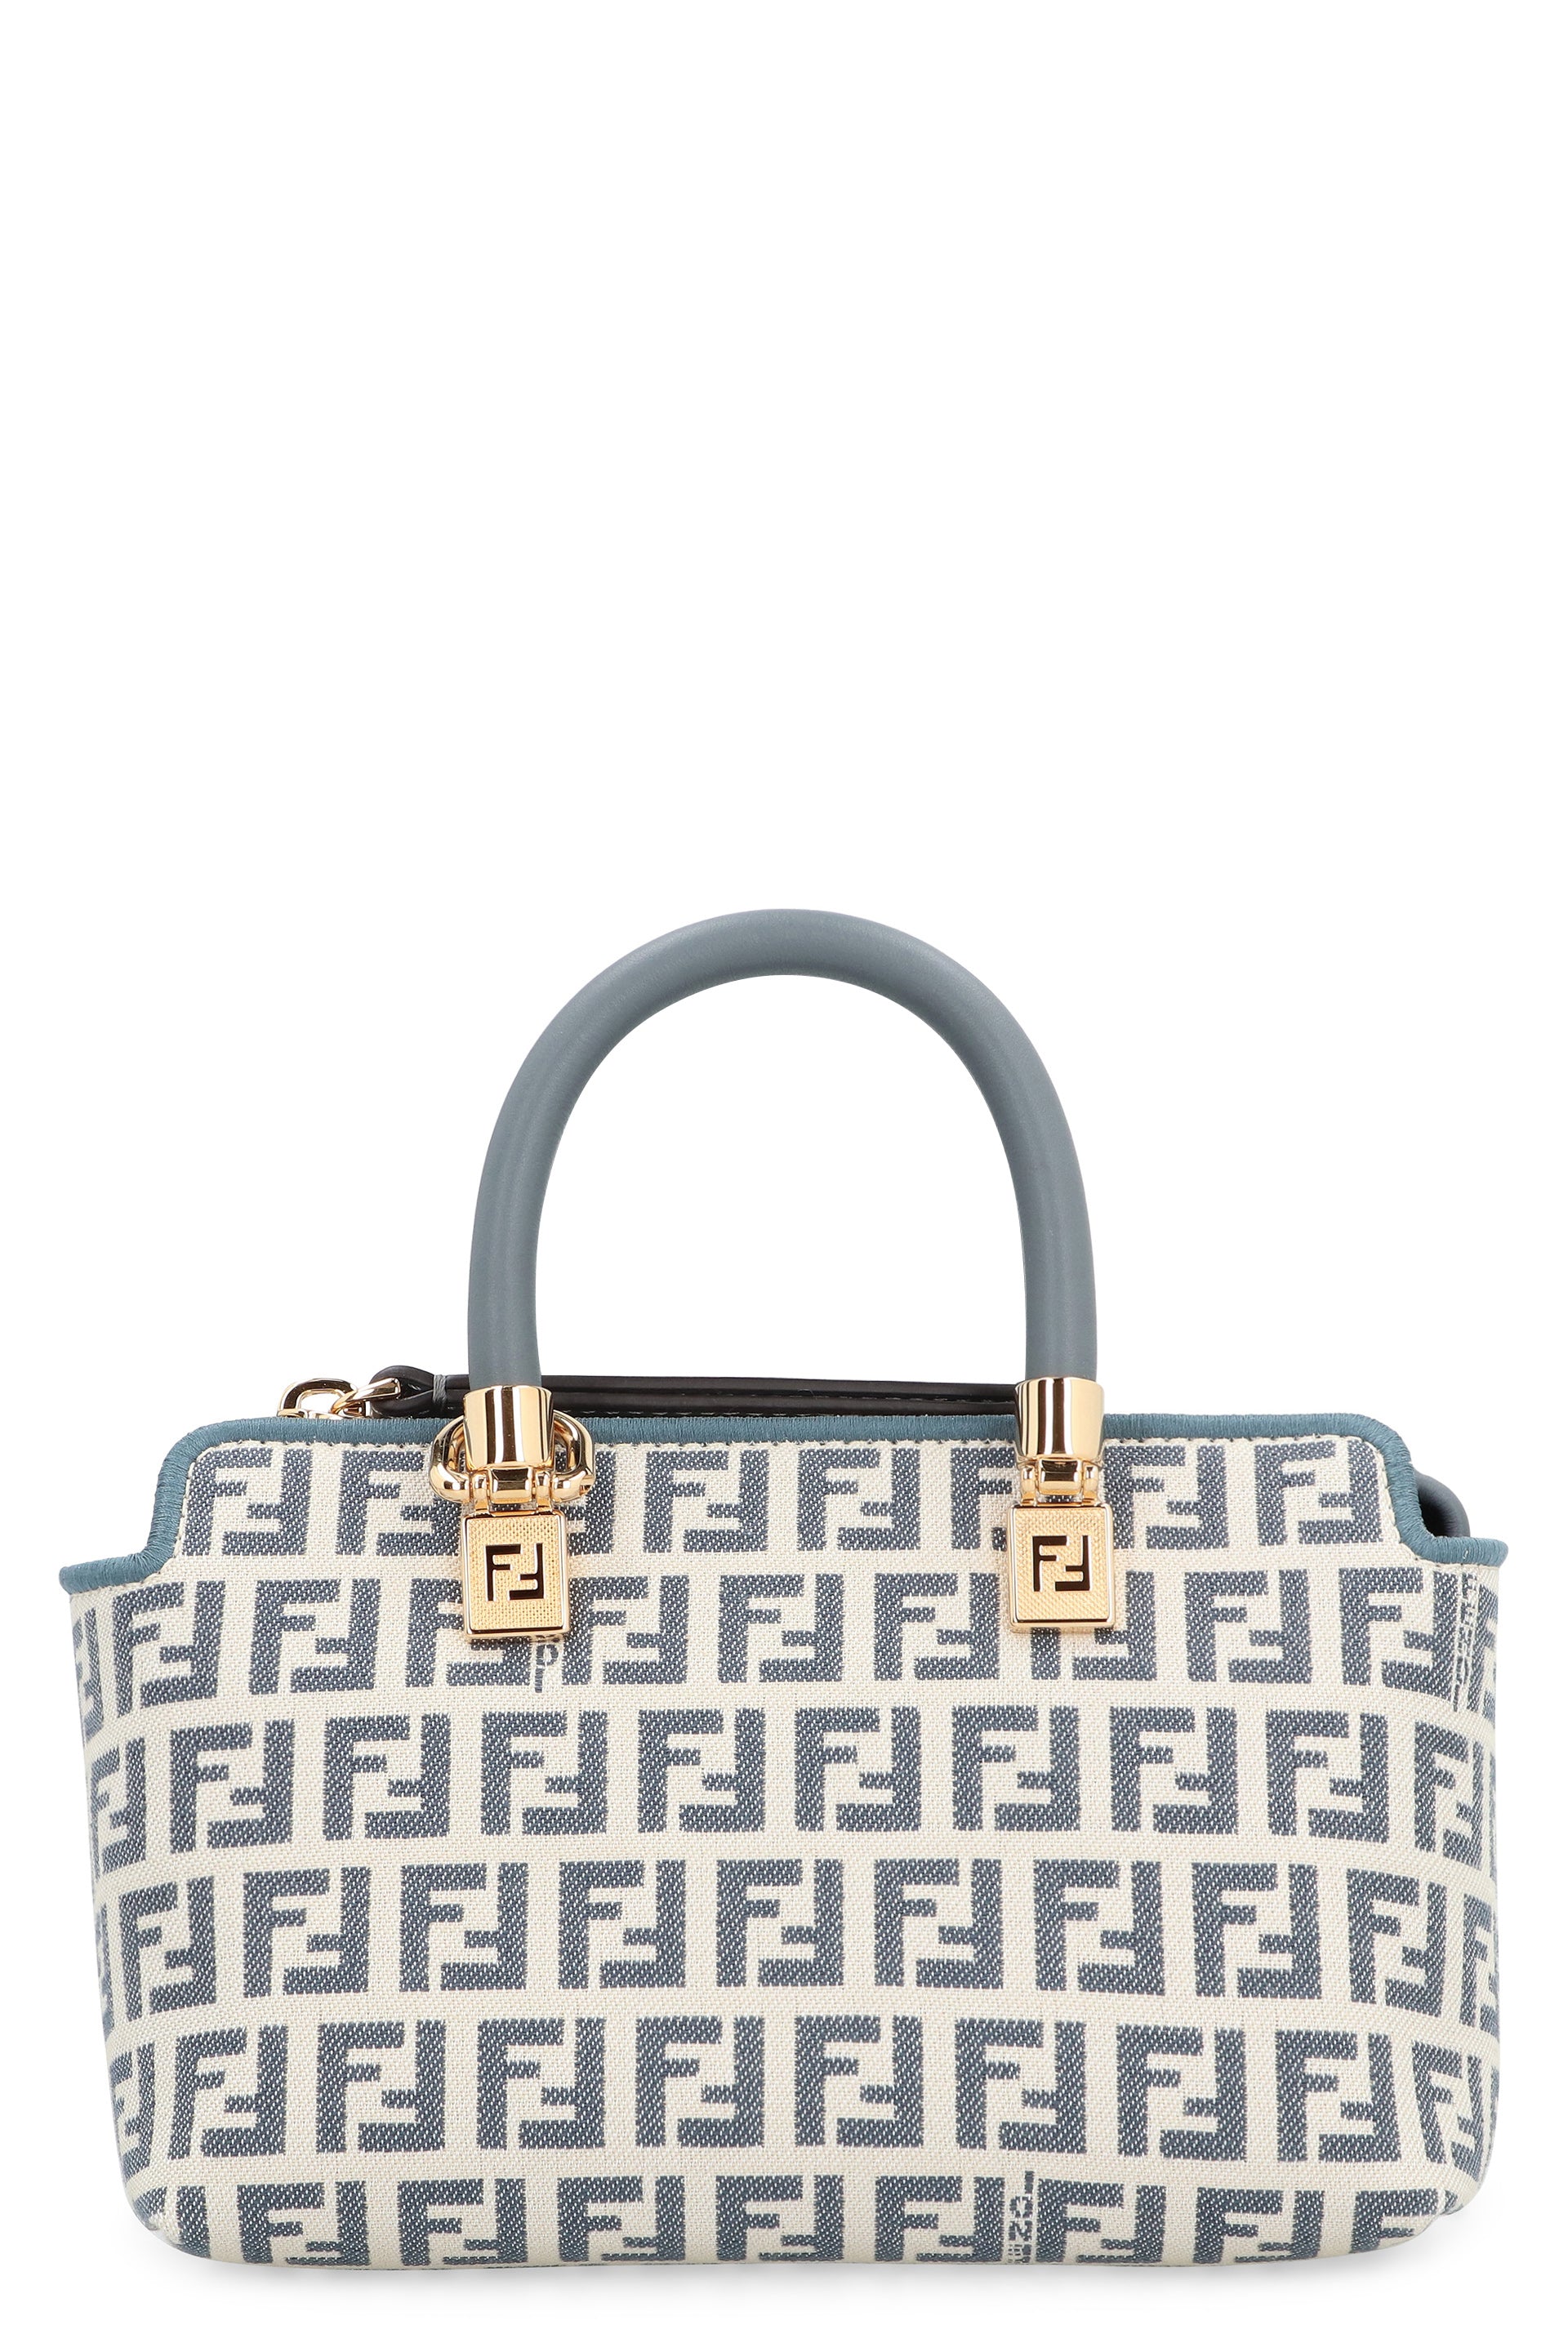 Fendi Blue Jacquard And Leather Top-handle Handbag For Women